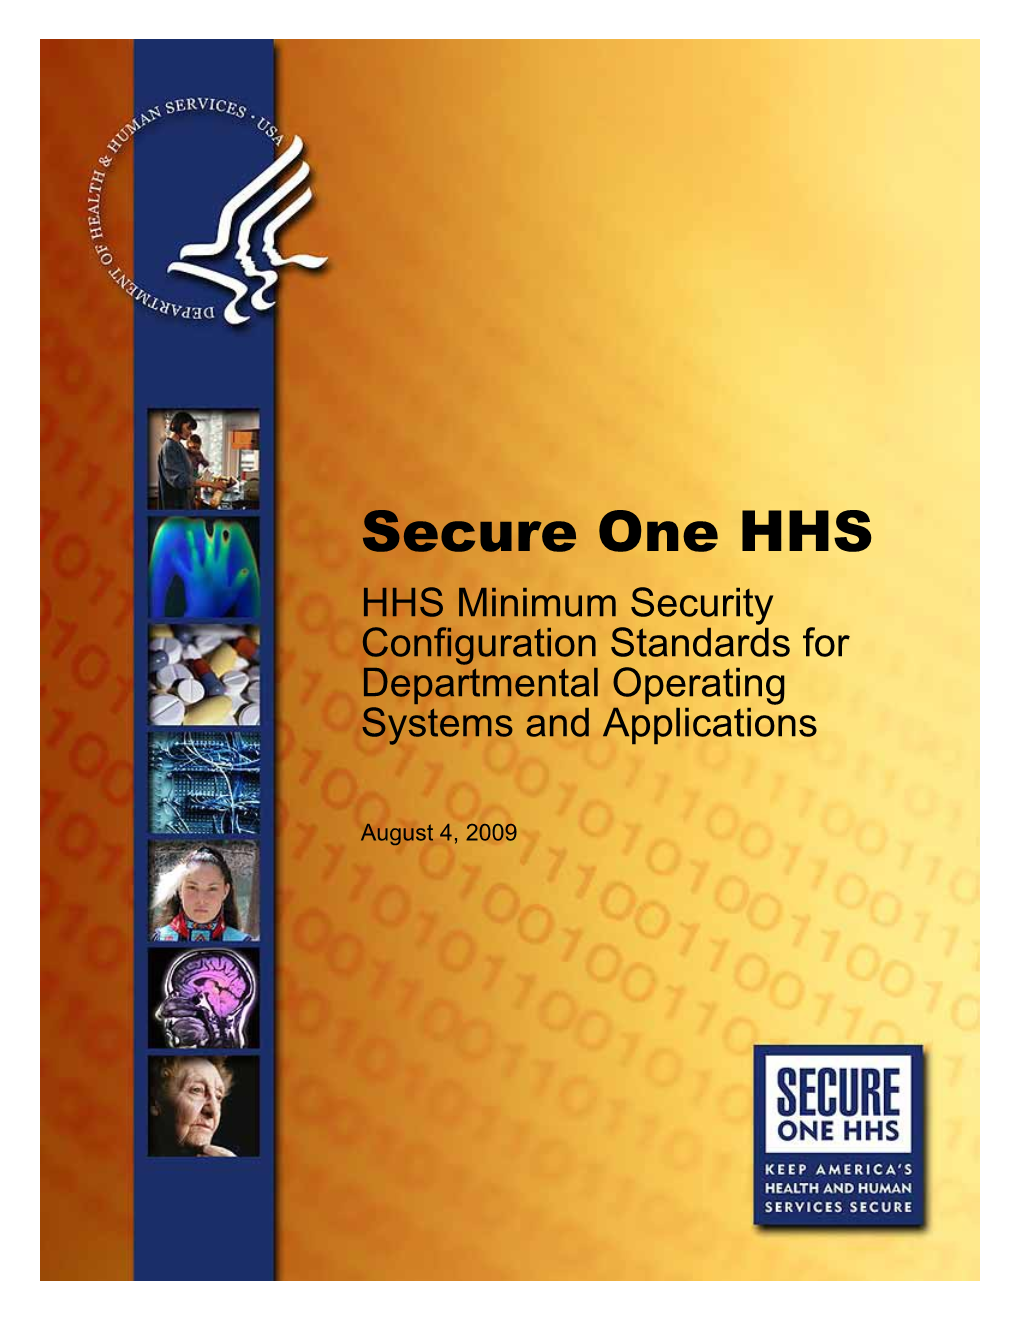 HHS Minimum Security Configuration Standards